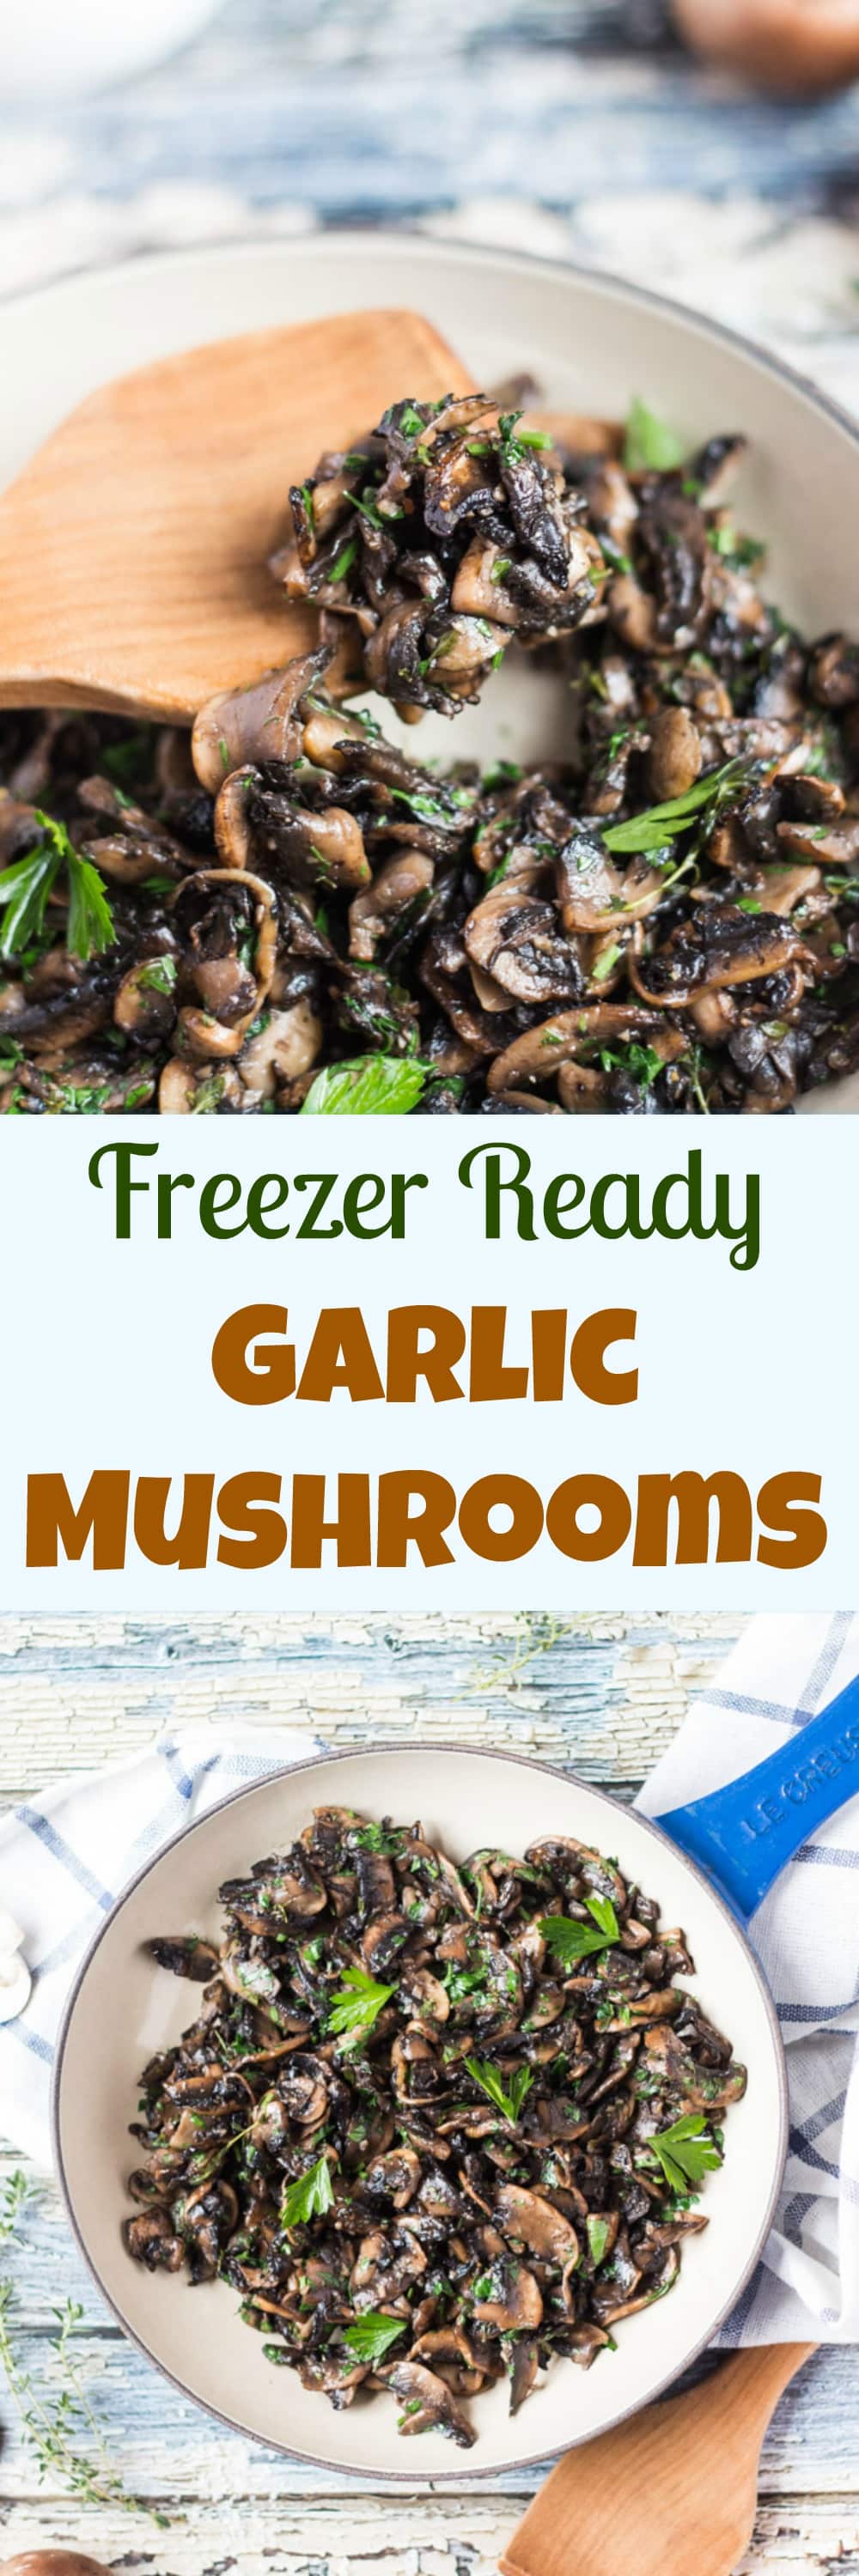 Freezer Ready Garlic Mushrooms. With a batch of these garlic mushrooms in the freezer, a simple meal is never far away.